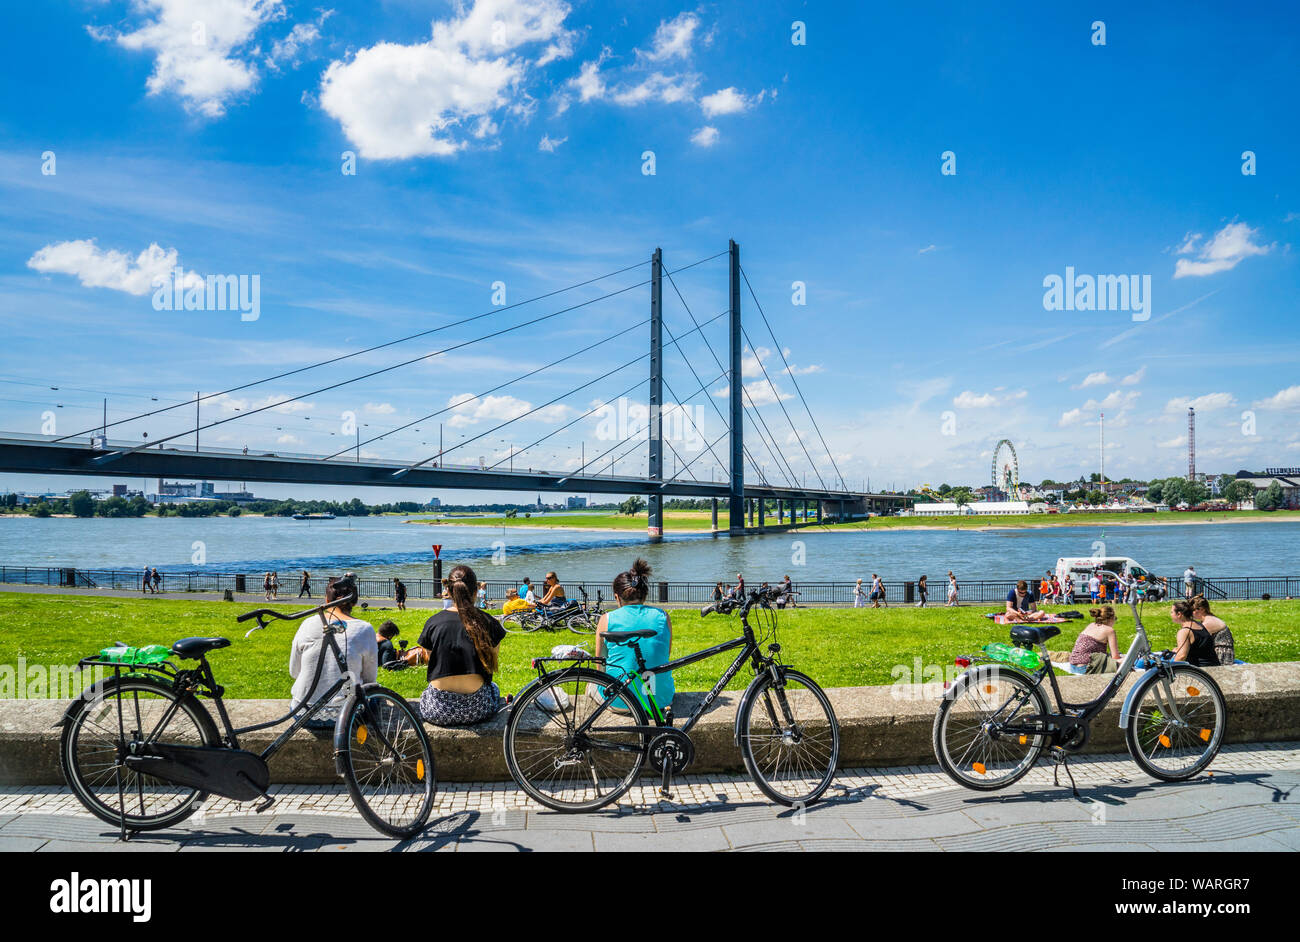 cycling tour break at the meadows of Apollo Wiese on the banks of River Rhine with view of the Rheinkniebrücke. Düsseldorf, North Rhine-Westphalia, Ge Stock Photo